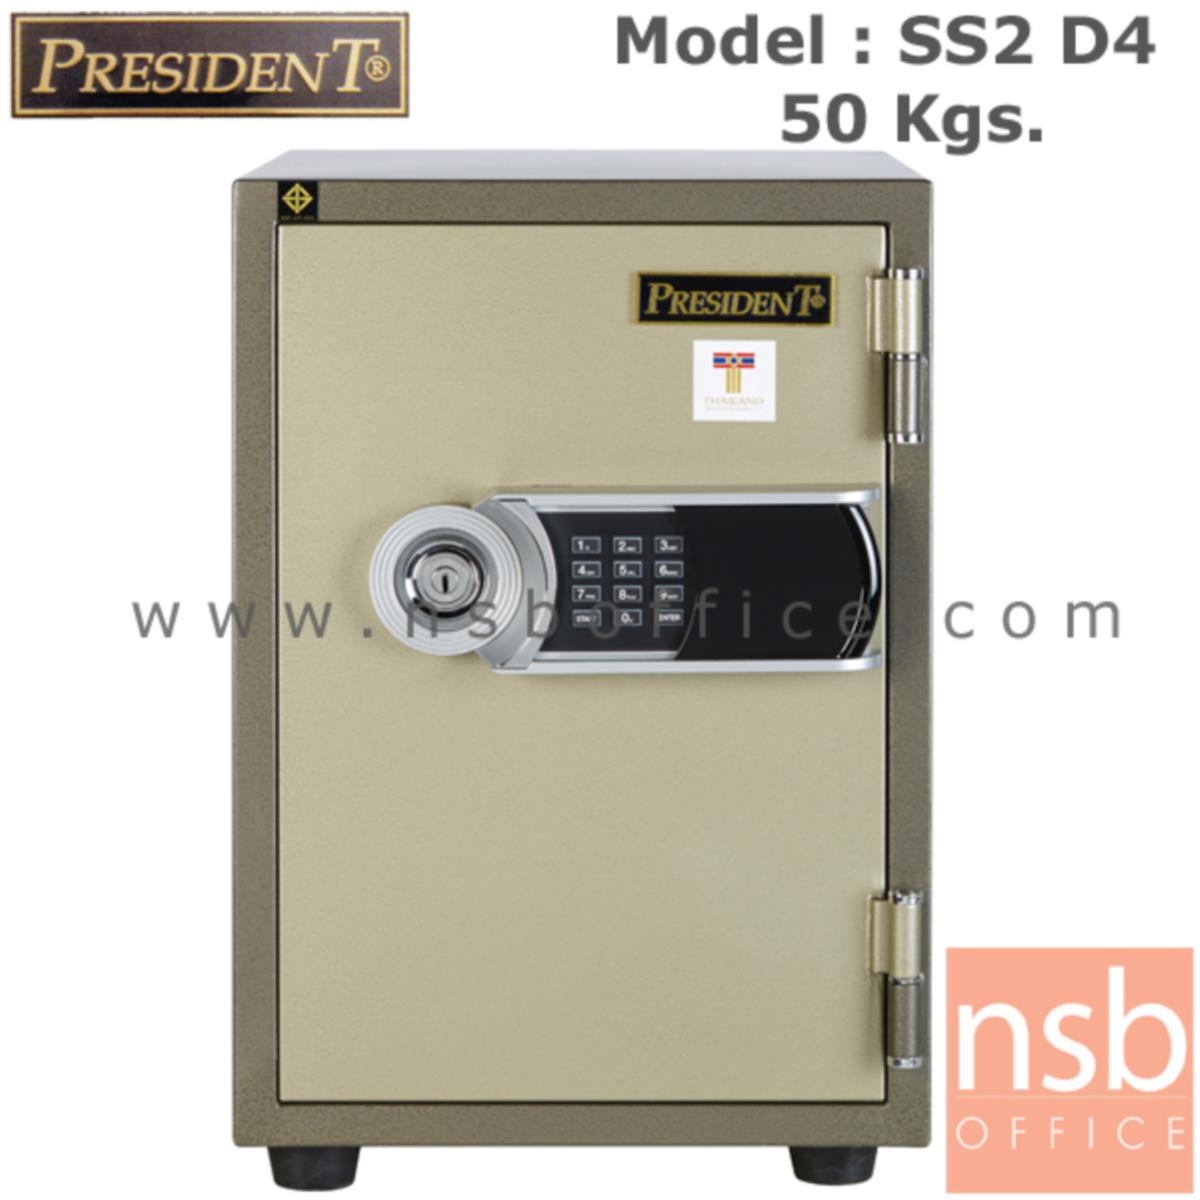 F05A071:ตู้เซฟนิรภัยชนิดดิจิตอลแบบใหม่ 50 กก. รุ่น PRESIDENT-SS2D4 มี 1 กุญแจ 1 รหัส (รหัสใช้กดหน้าตู้)